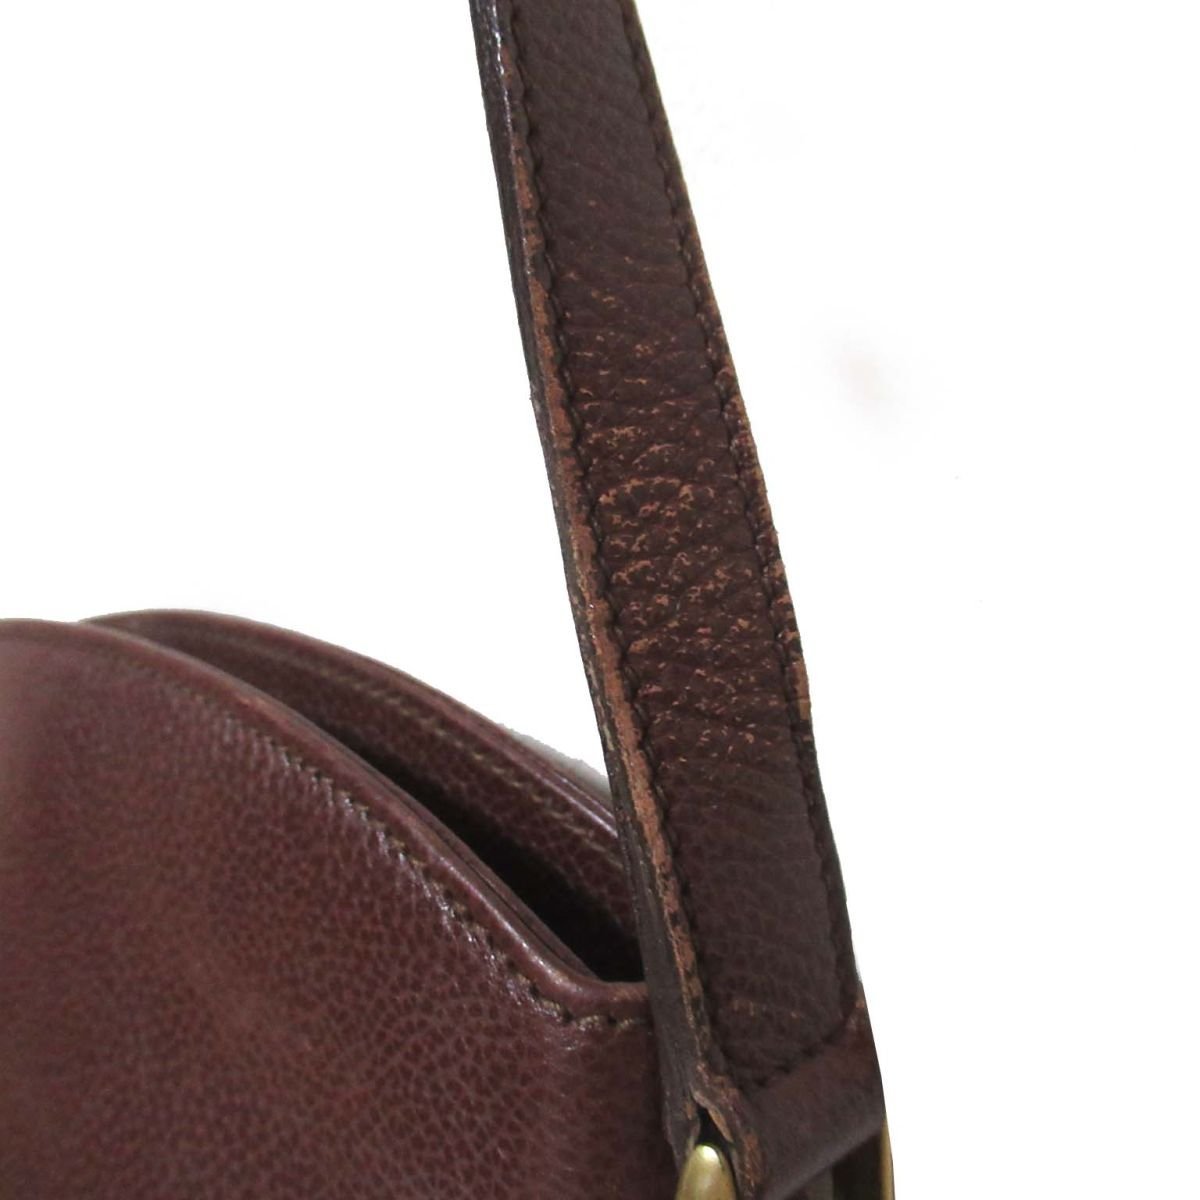  superior article COACH Old Coach Vintage leather Cross body shoulder bag pochette 3205-825 Brown 